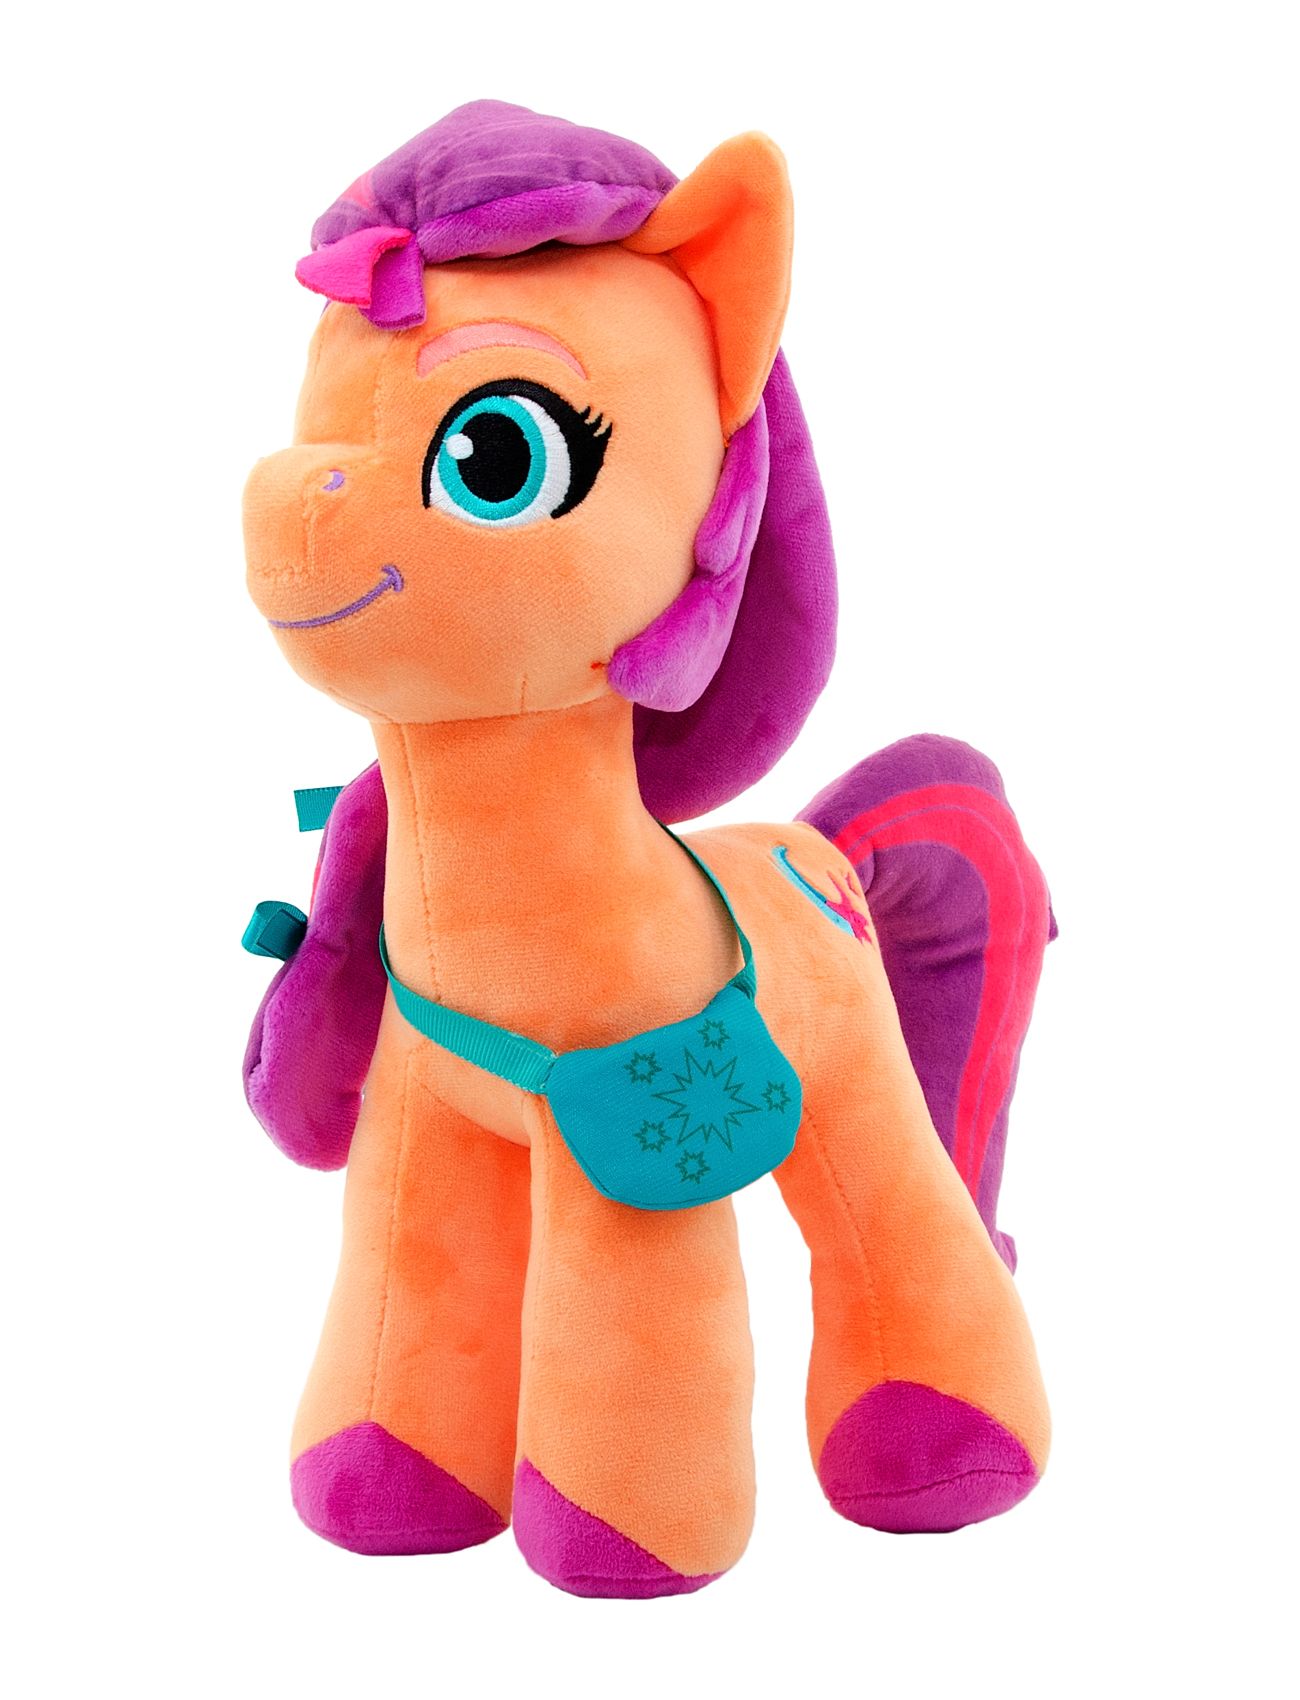 My Little Pony Plush Sunny Toys Soft Toys Stuffed Animals Multi/patterned Martinex